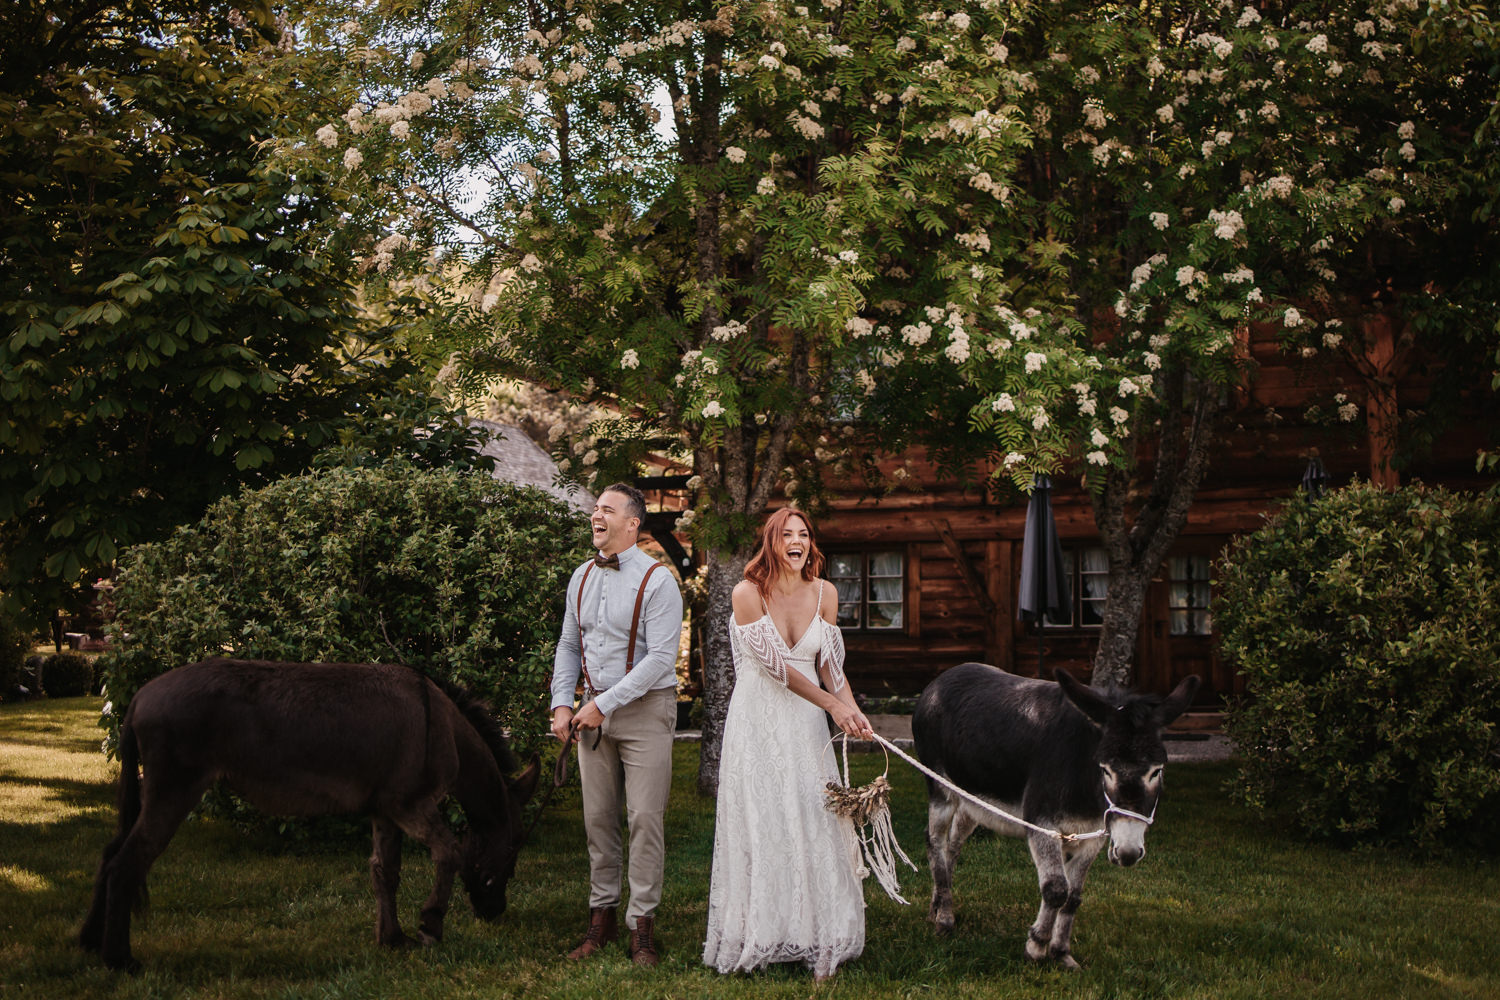 Brautpaarshooting mit Eseln